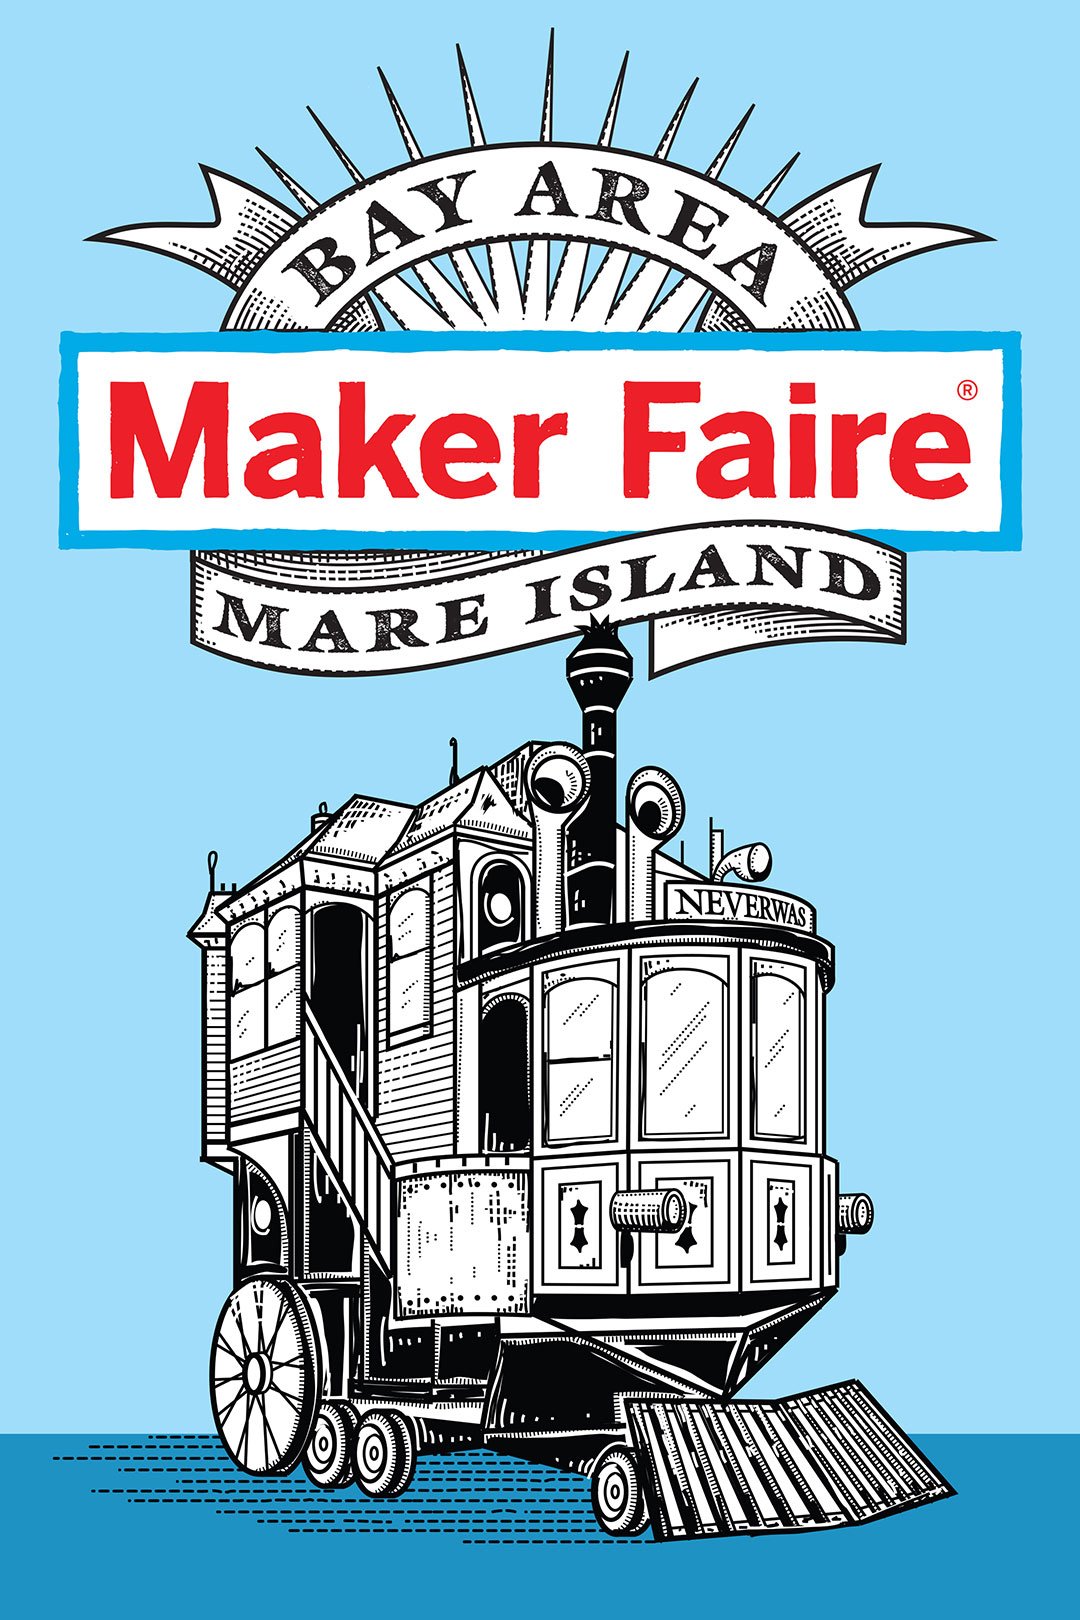 Maker Faire Neverwas.jpg